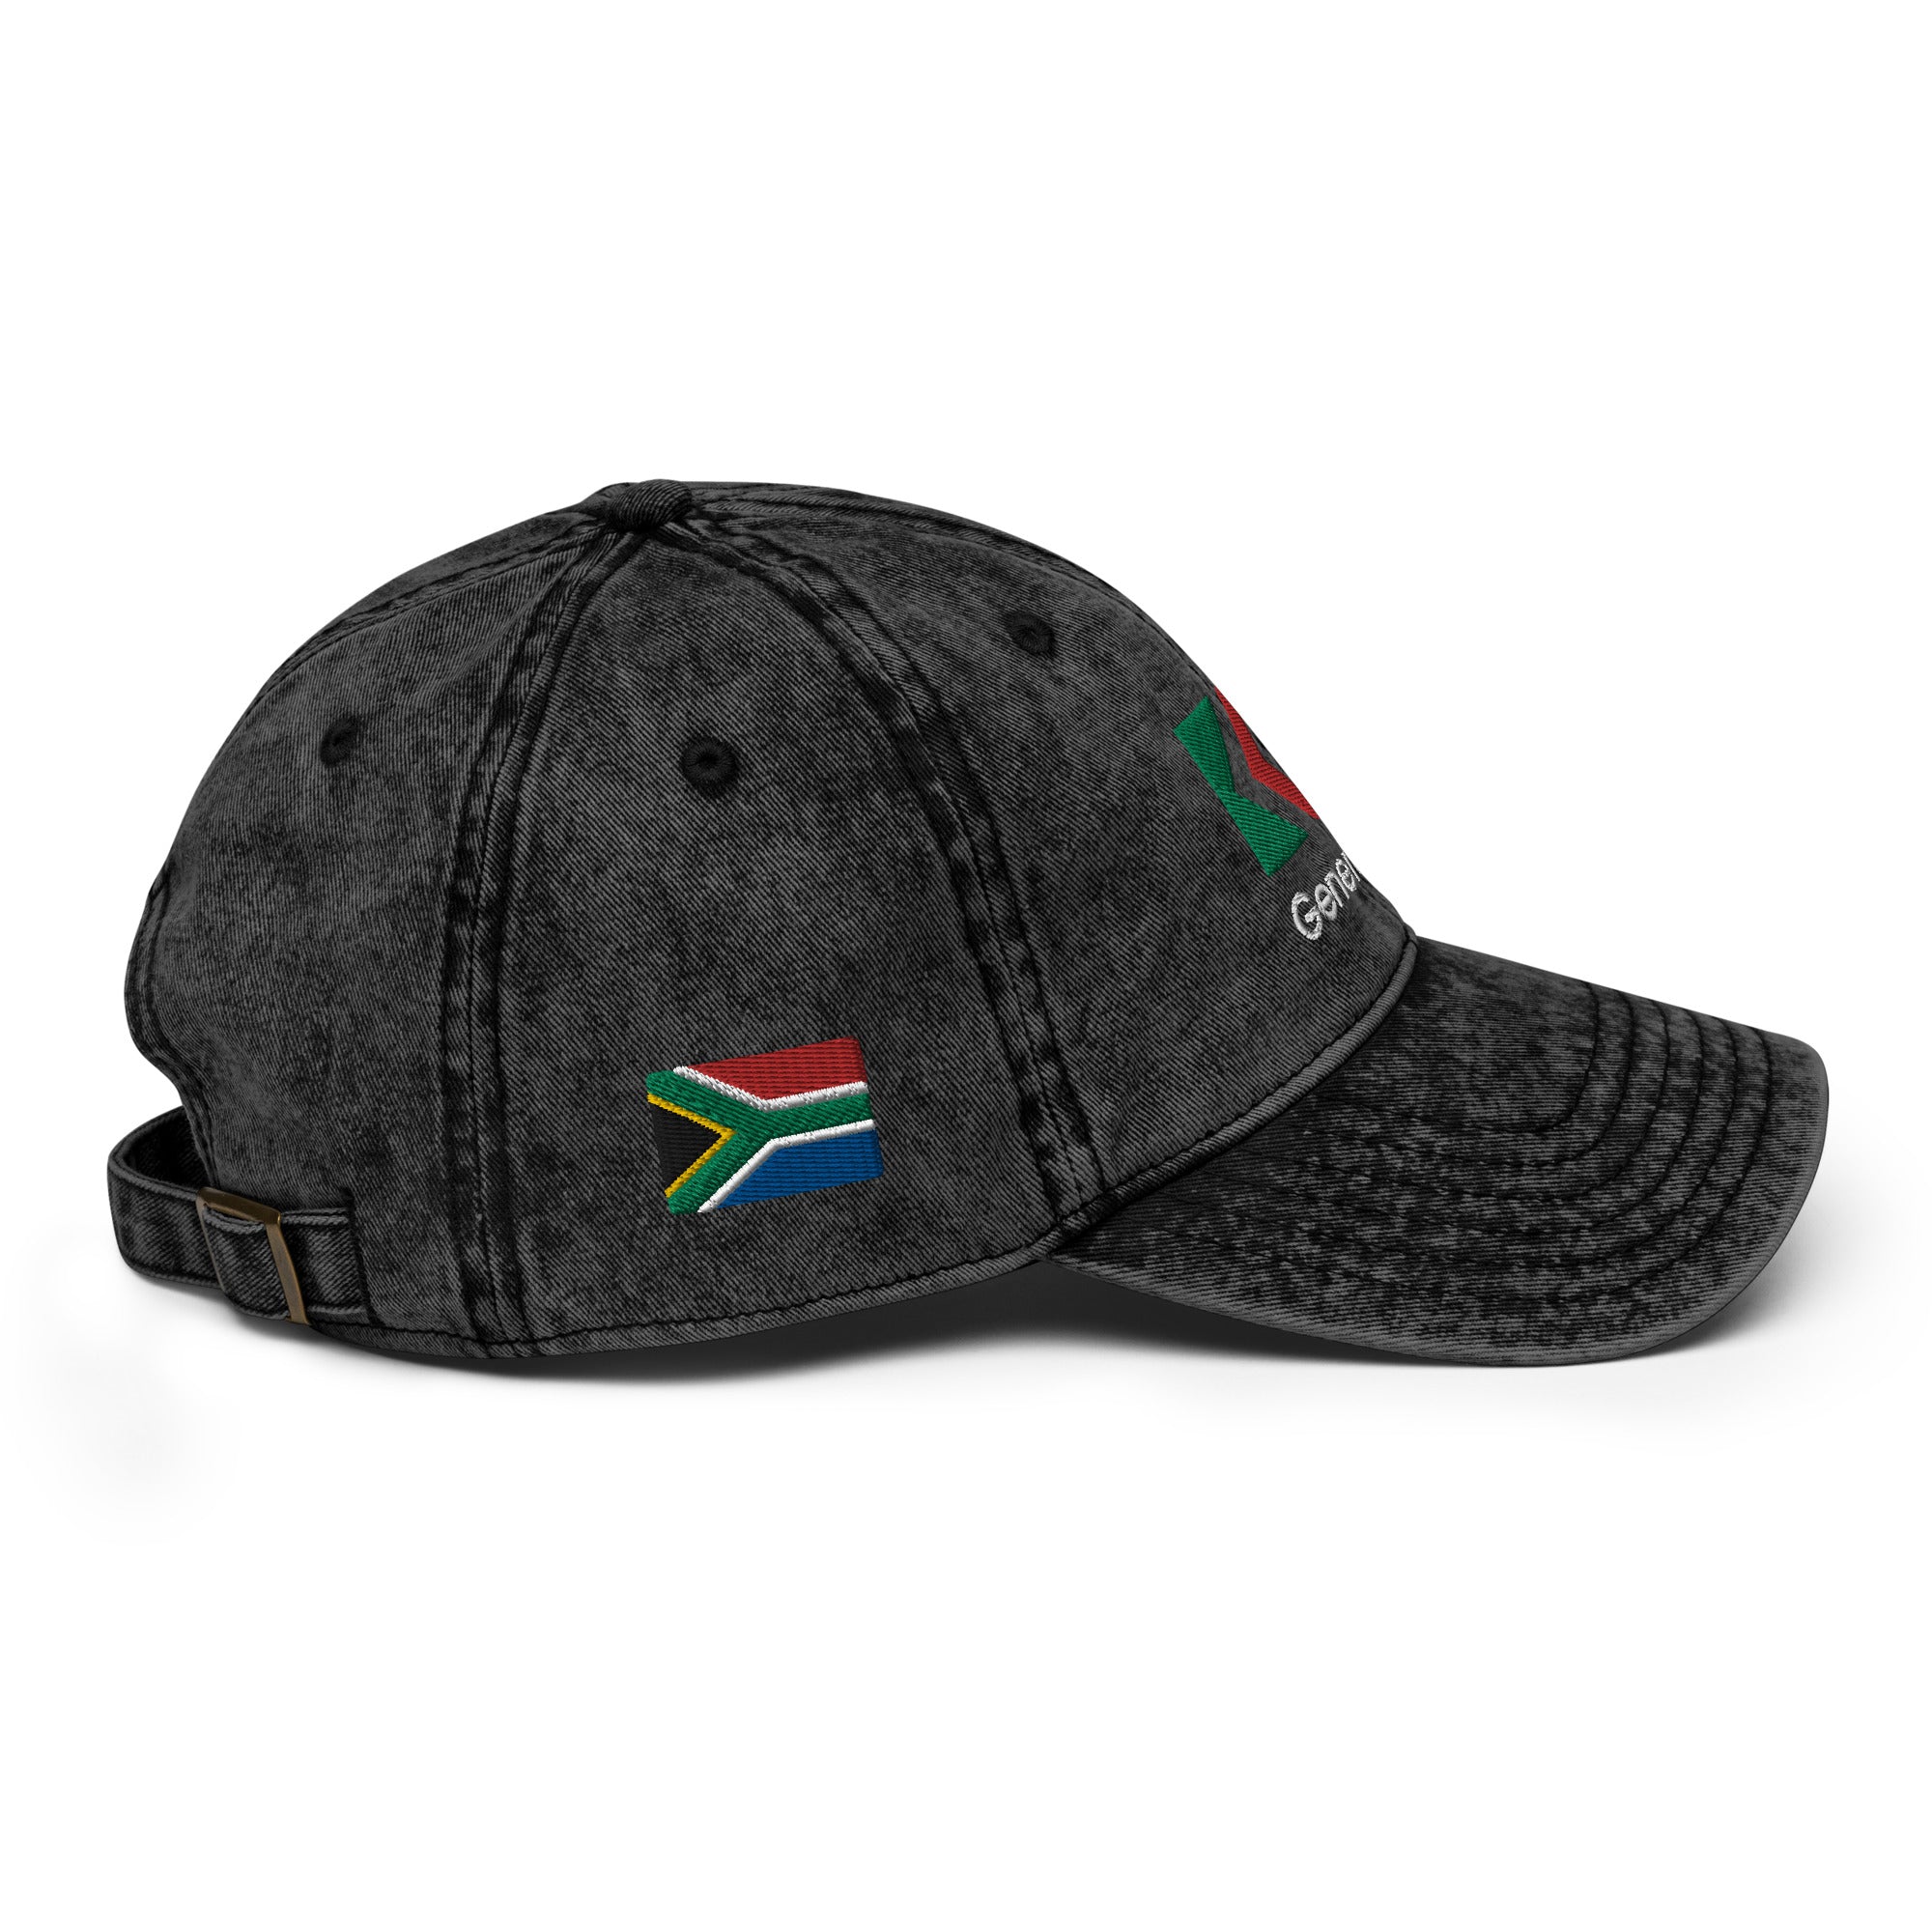 🇿🇦 South Africa Triple K G cap